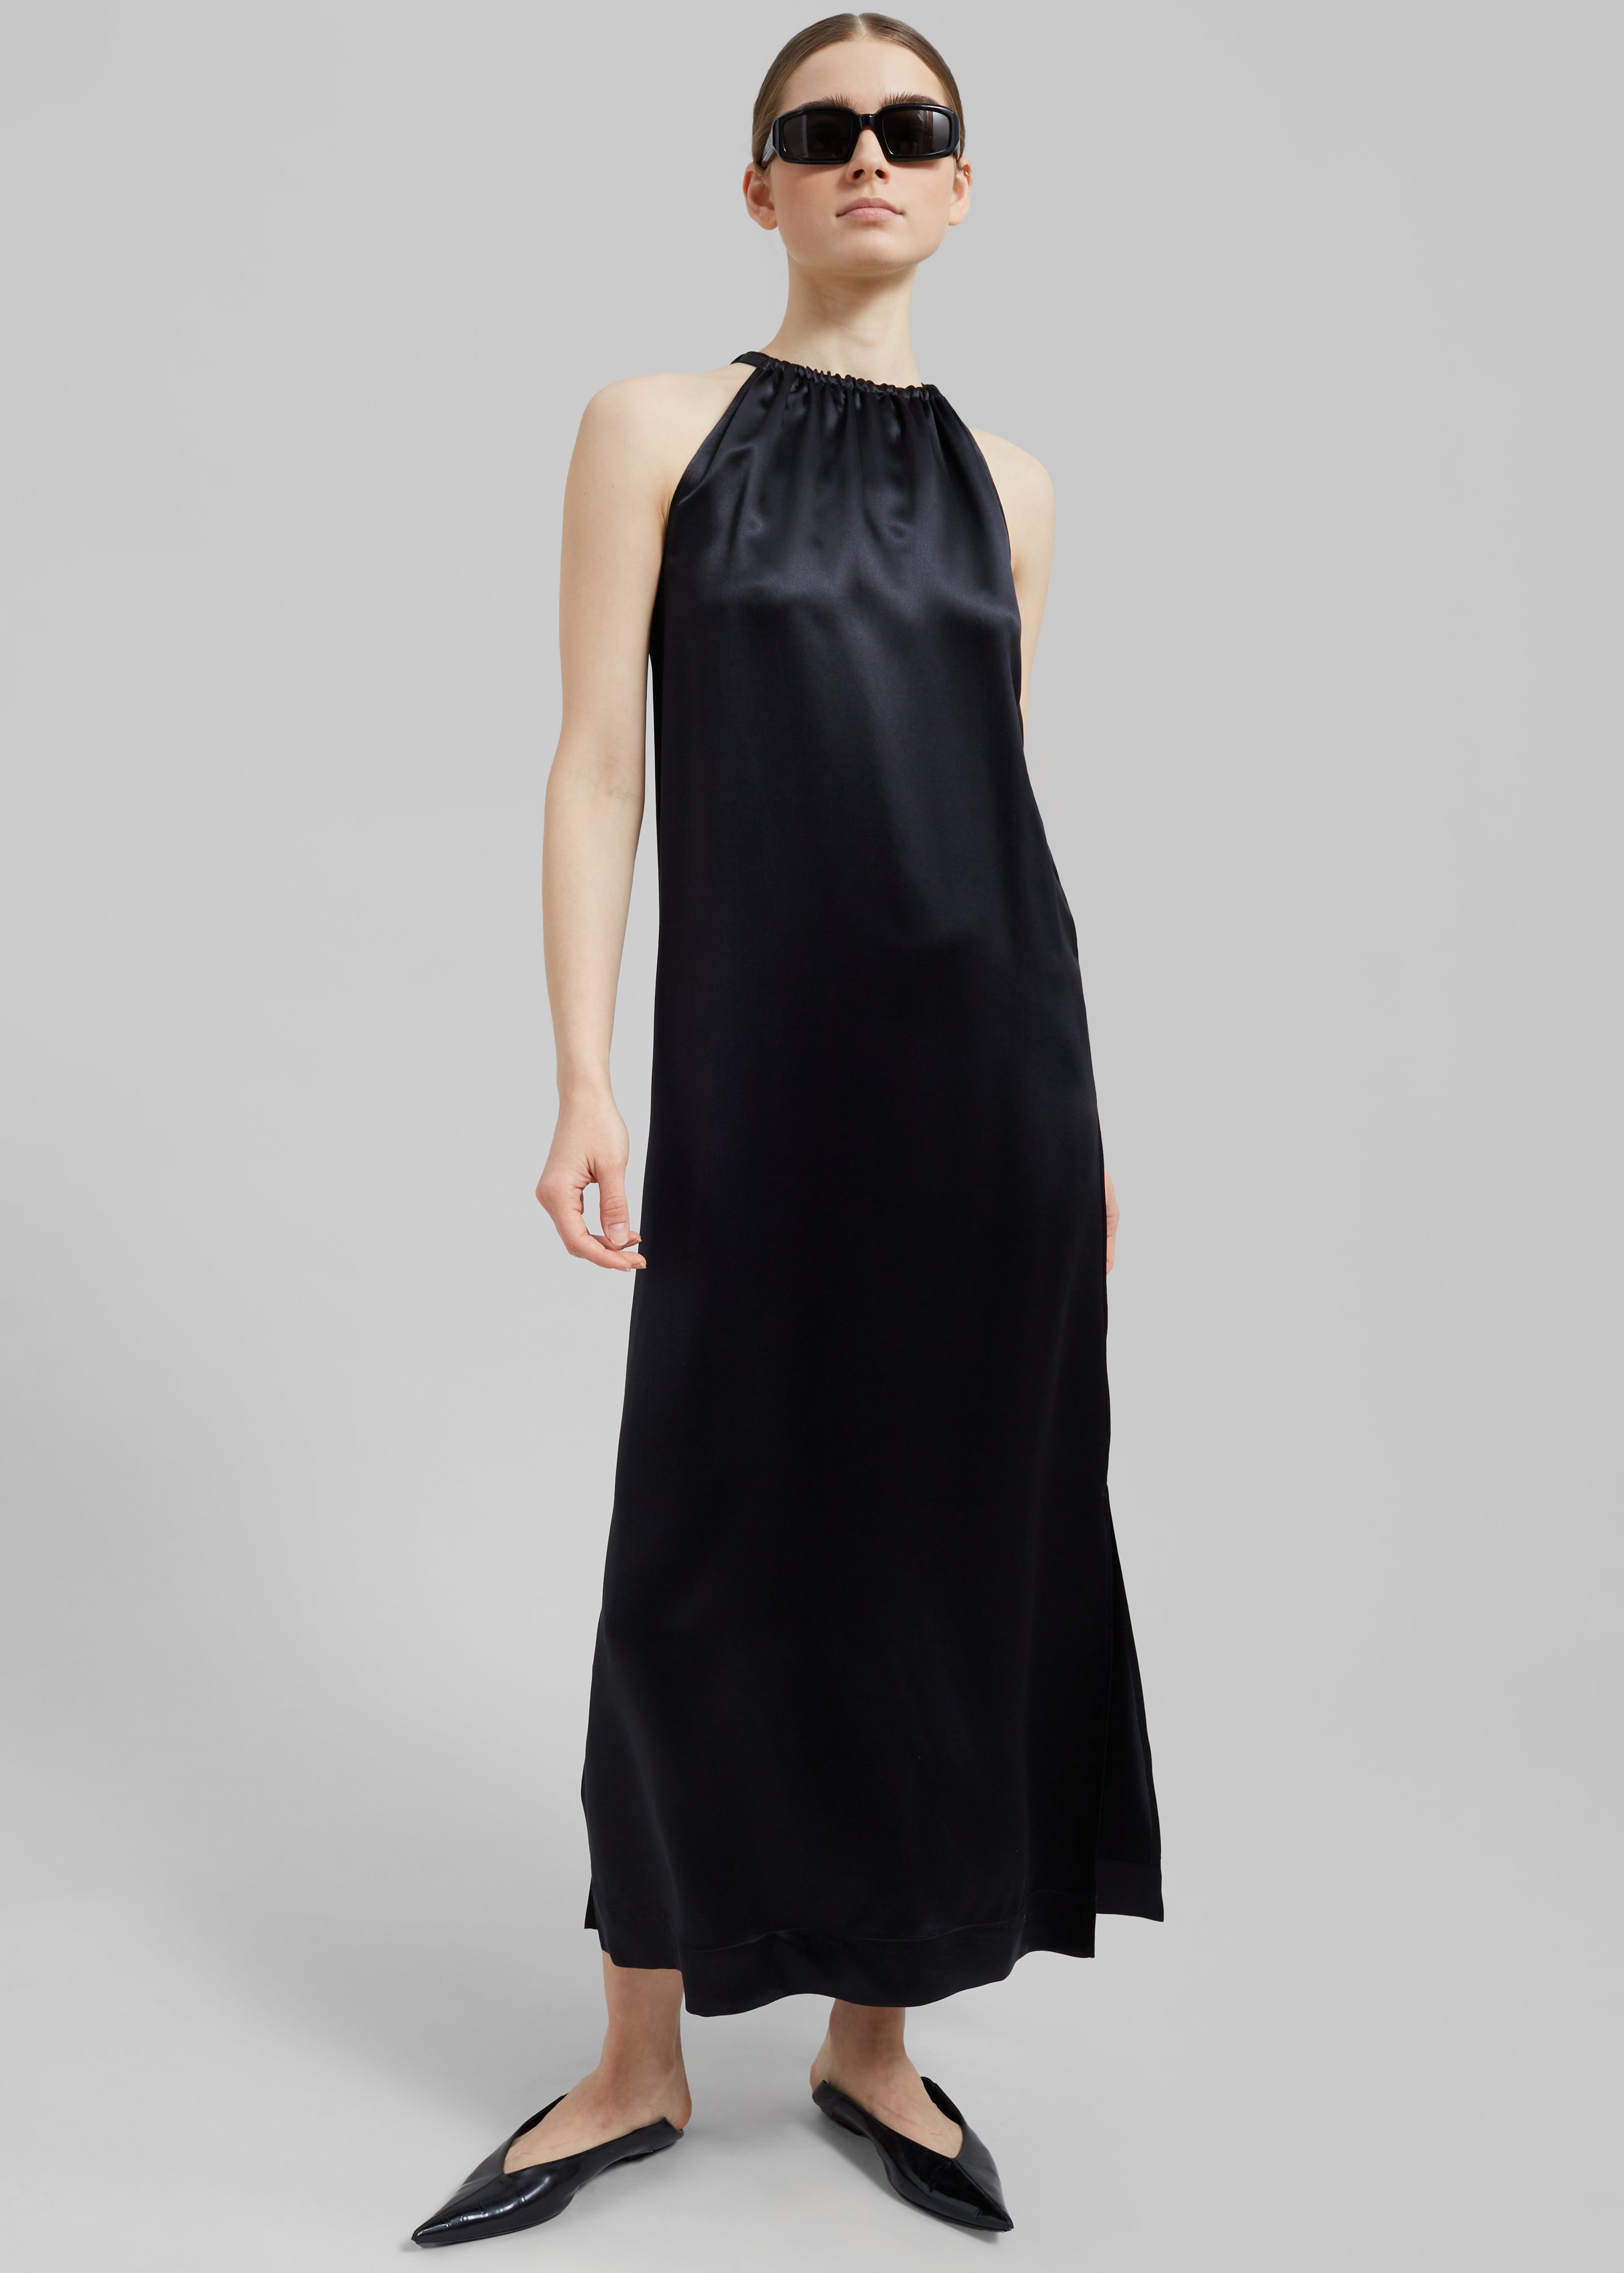 Women's Midi & Long Dresses – The Frankie Shop